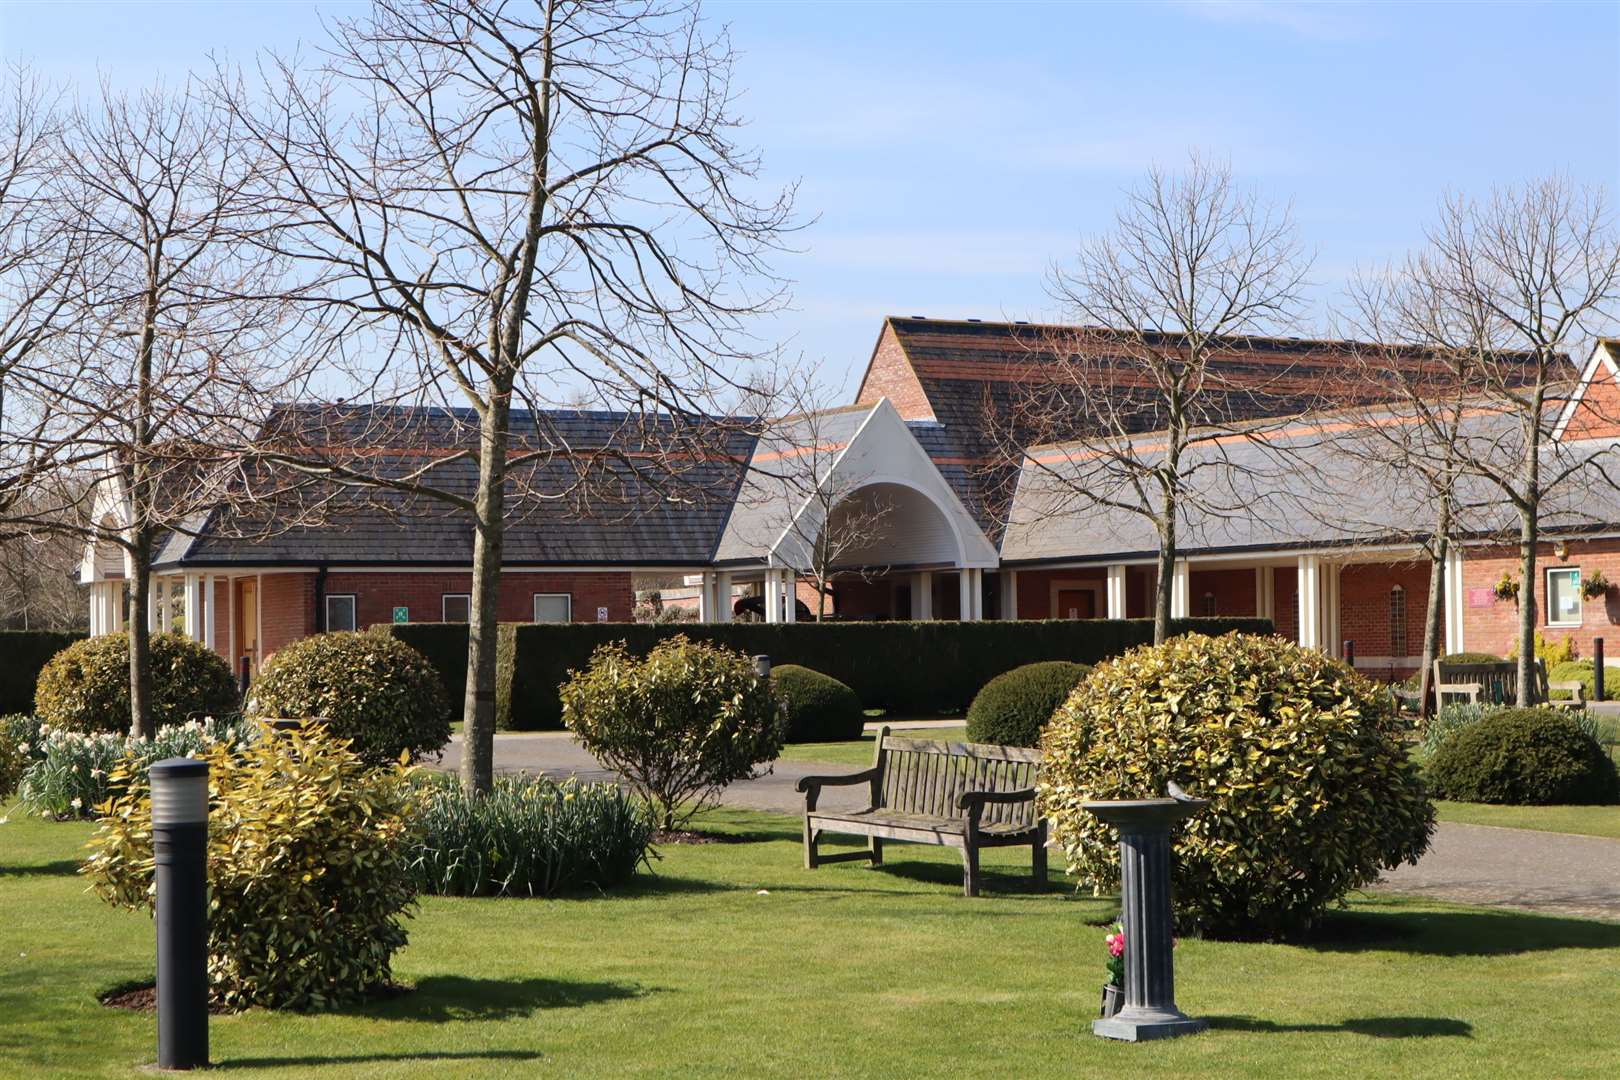 The Garden of England Crematorium at Bobbing near Sittingbourne